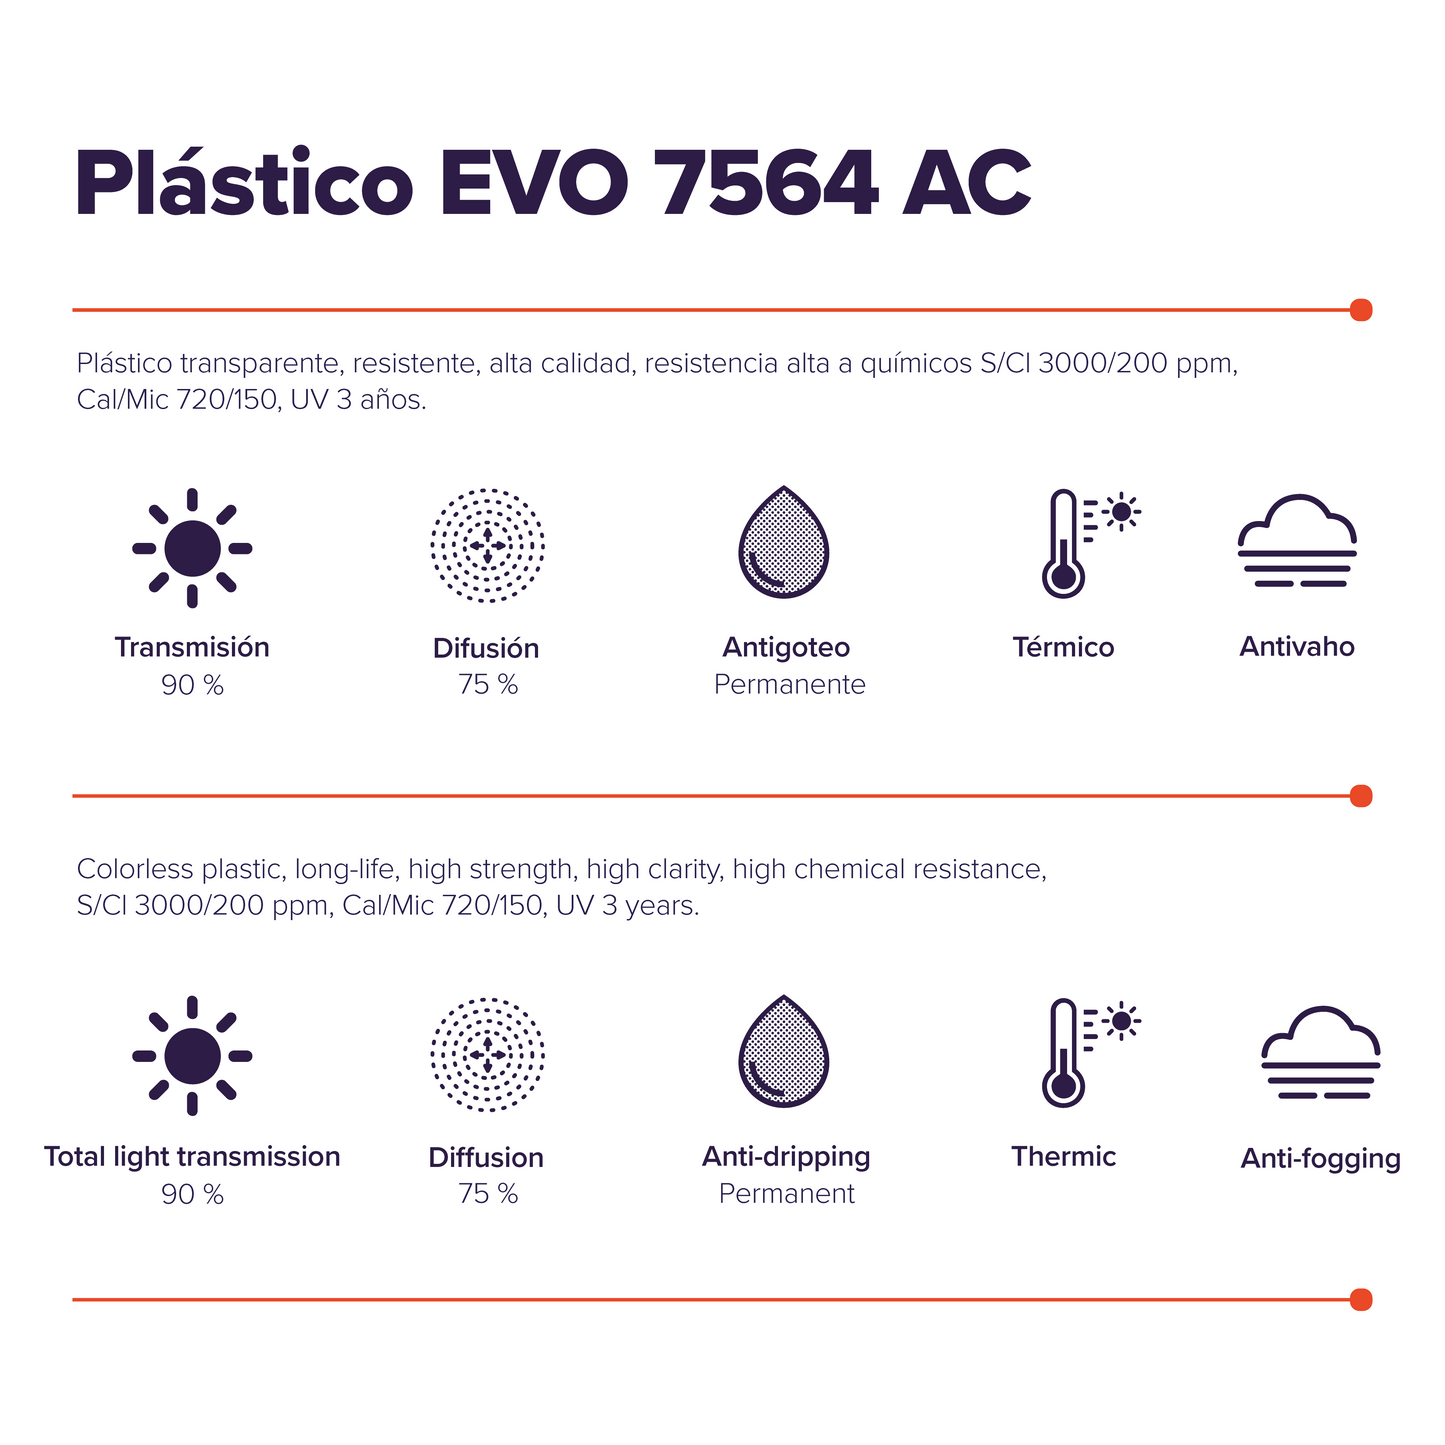 Plastic EVO 7564 AC